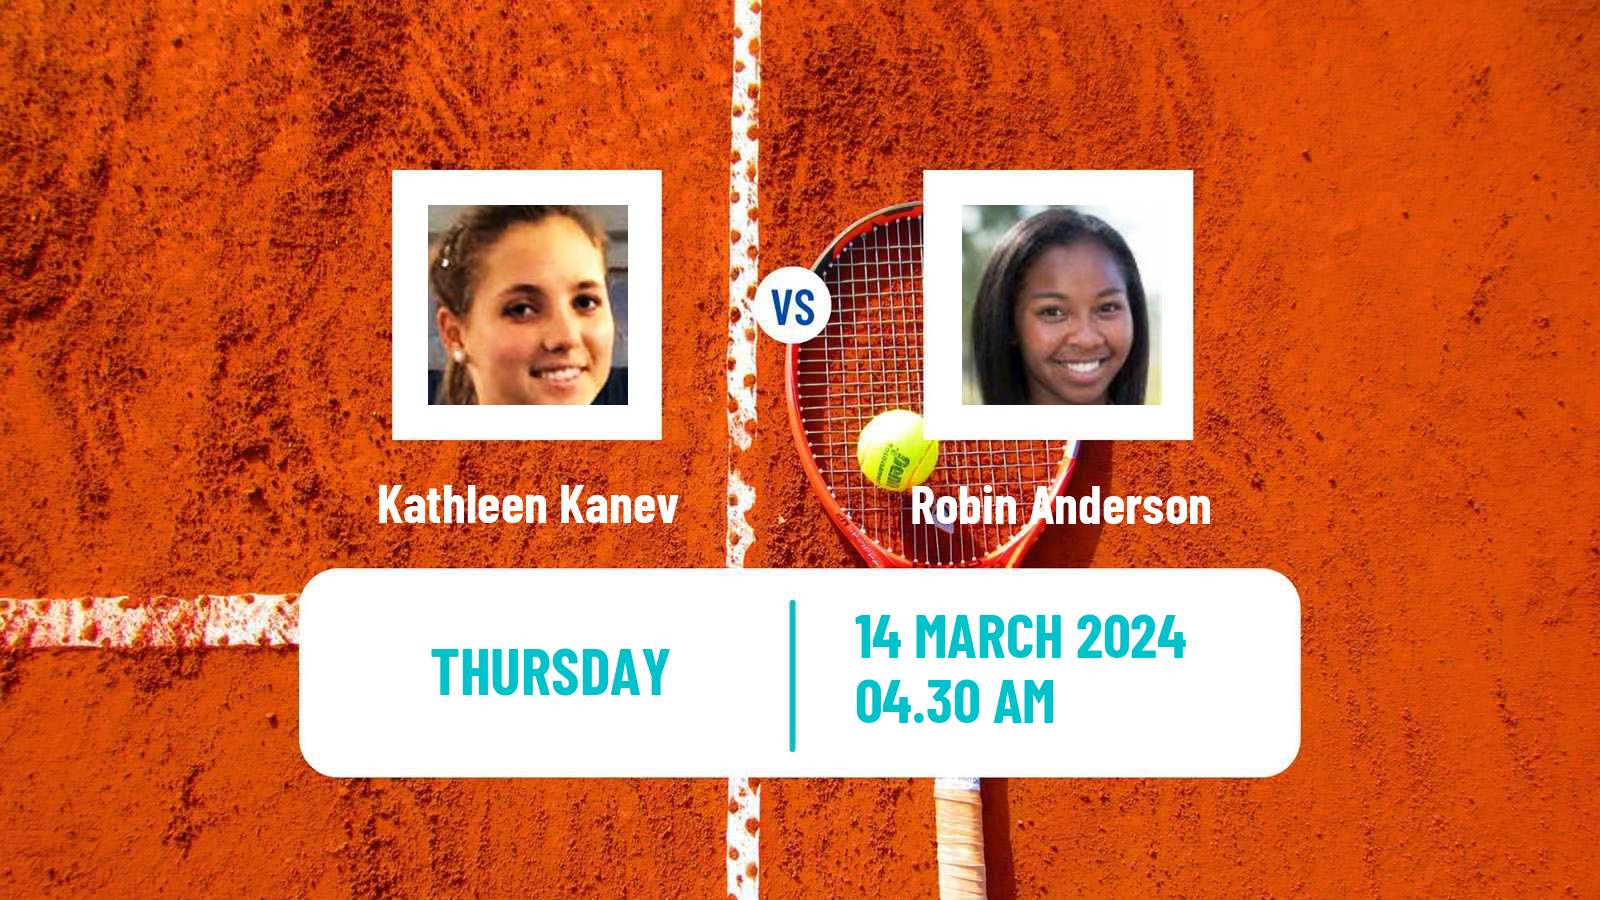 Tennis ITF W35 Solarino 2 Women Kathleen Kanev - Robin Anderson